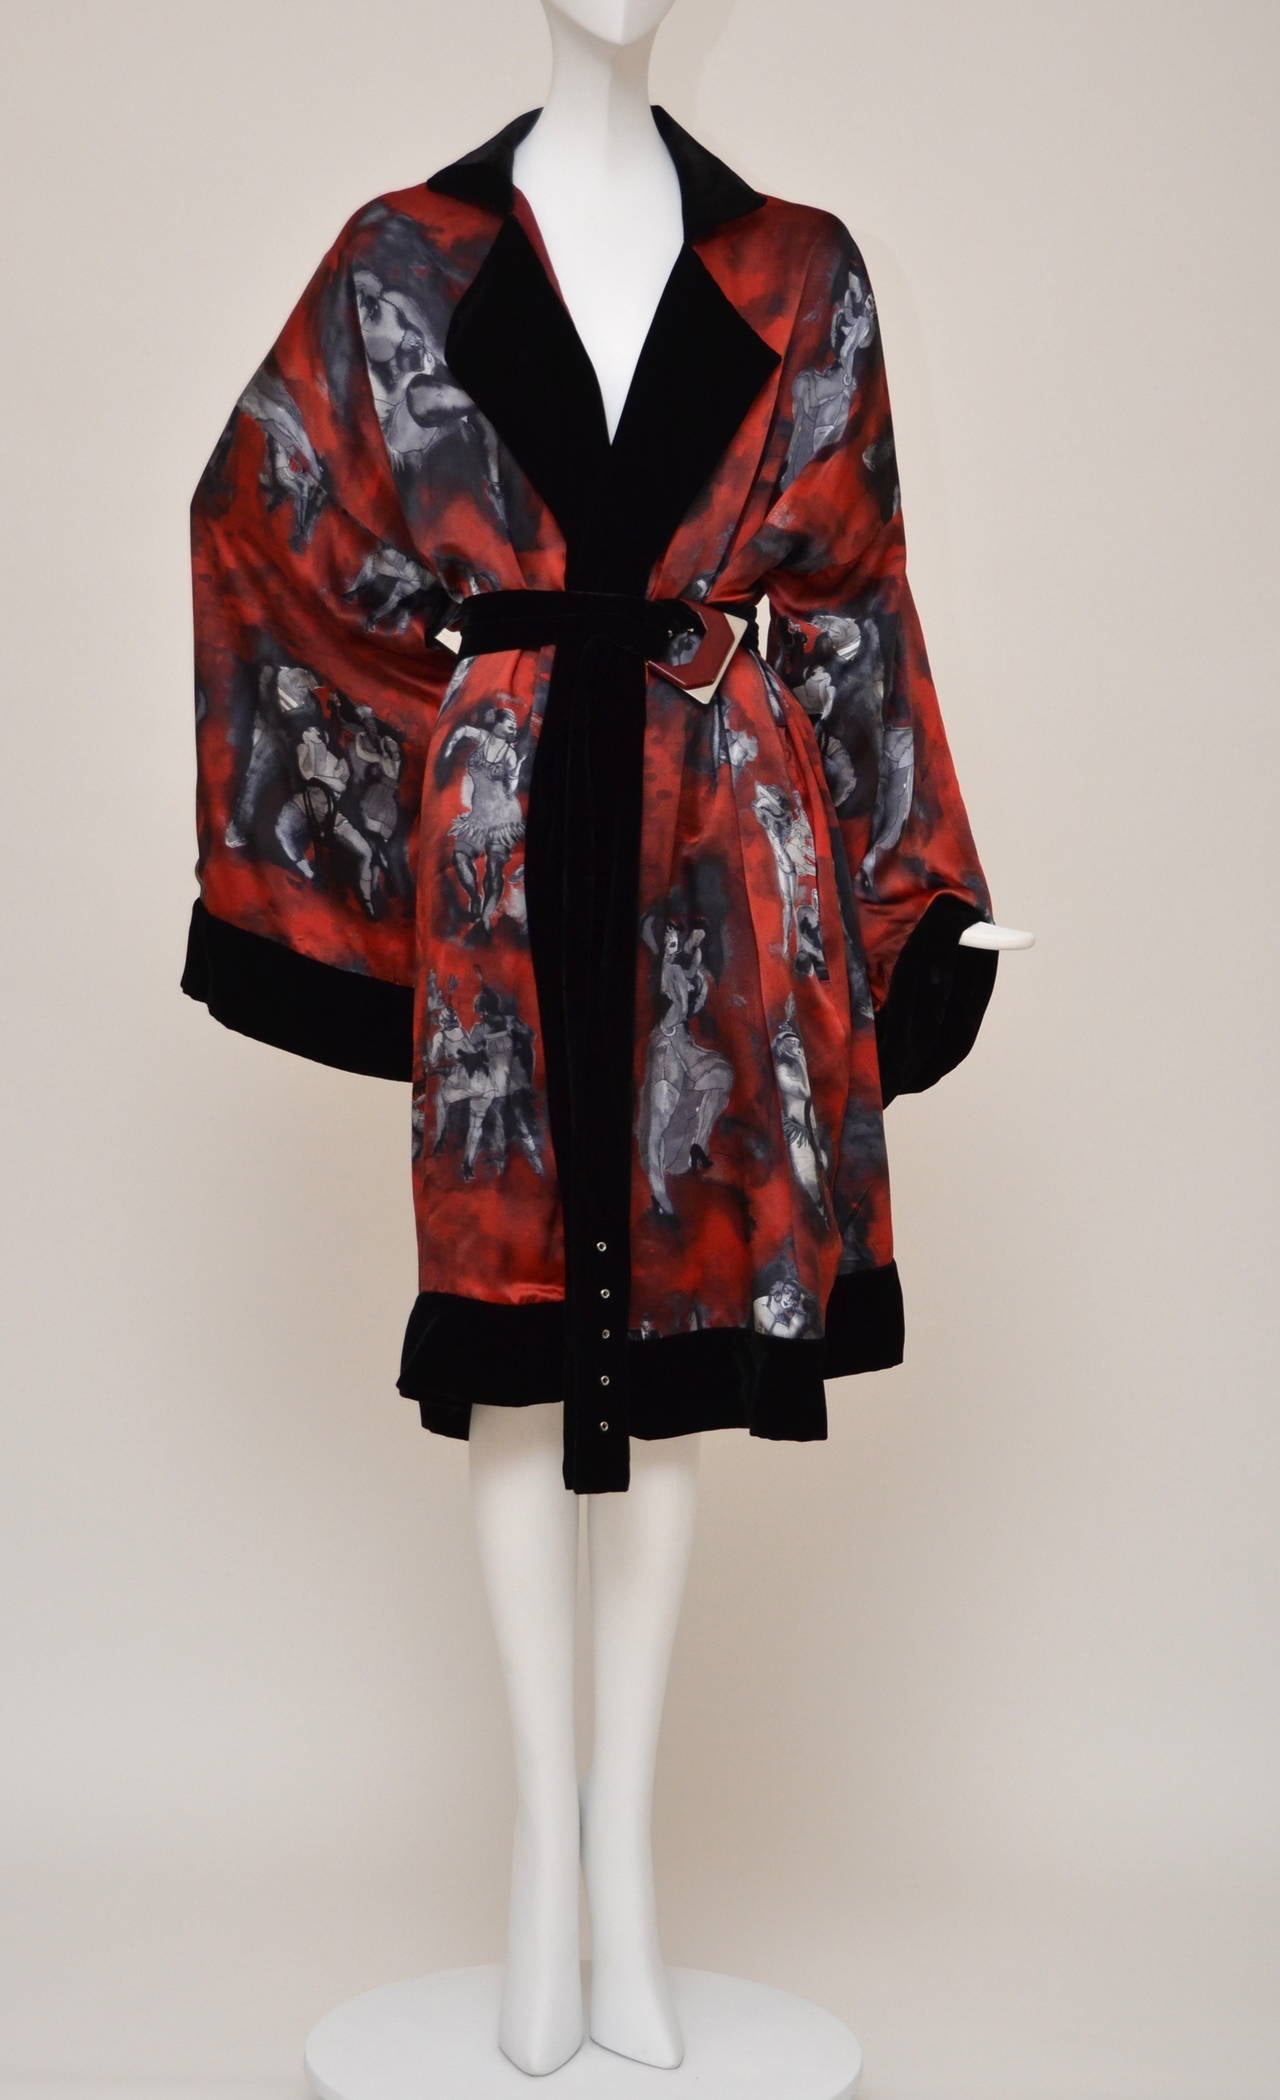 Jean Paul Gaultier Femme Kimono dress with belt.
Black velvet on the edges.
Very beautiful  print .Oversized style.
Looks unworn.
Size 40.Made in Italy.
Lined in fine red silk.

FINAL SALE.